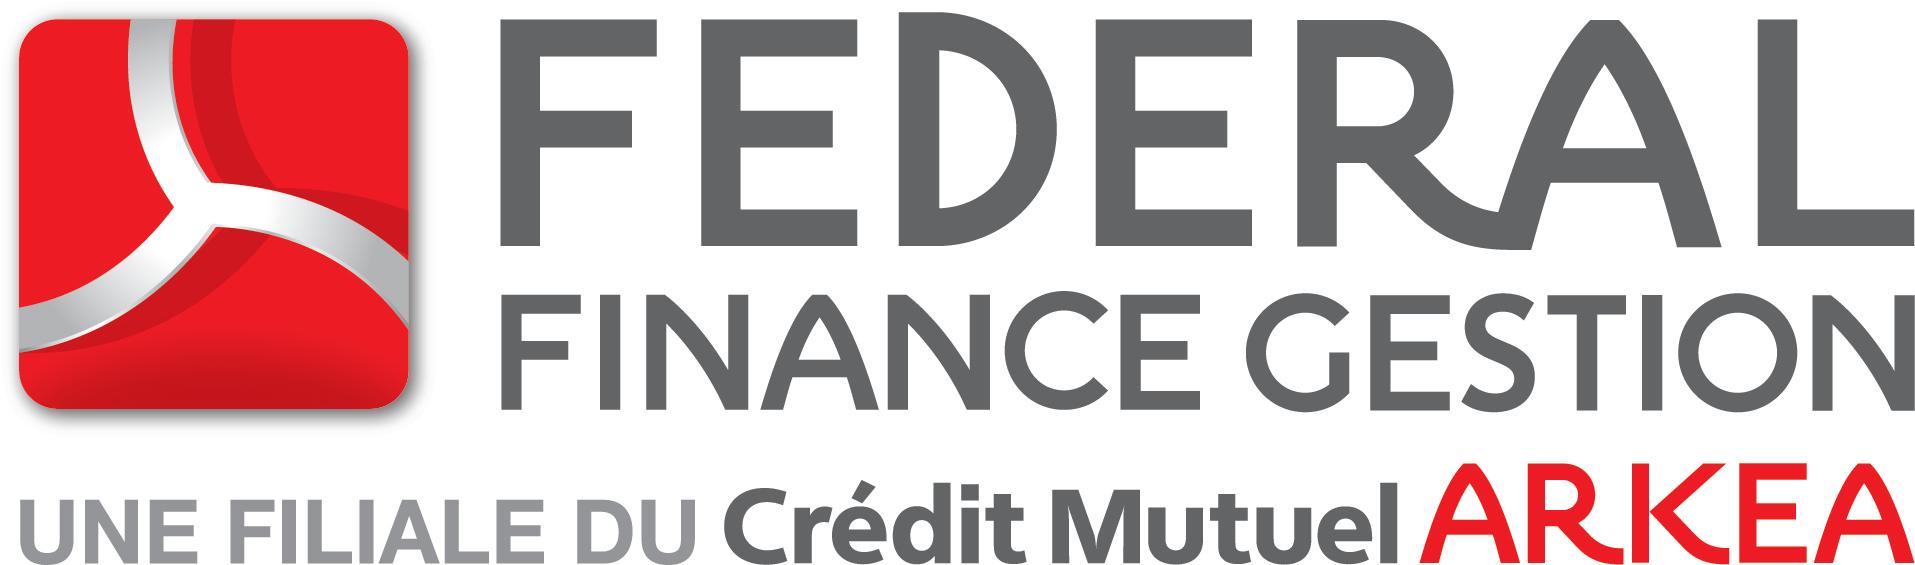 Logo FEDERAL FINANCE GESTION Filiale Credit mutuel arkea